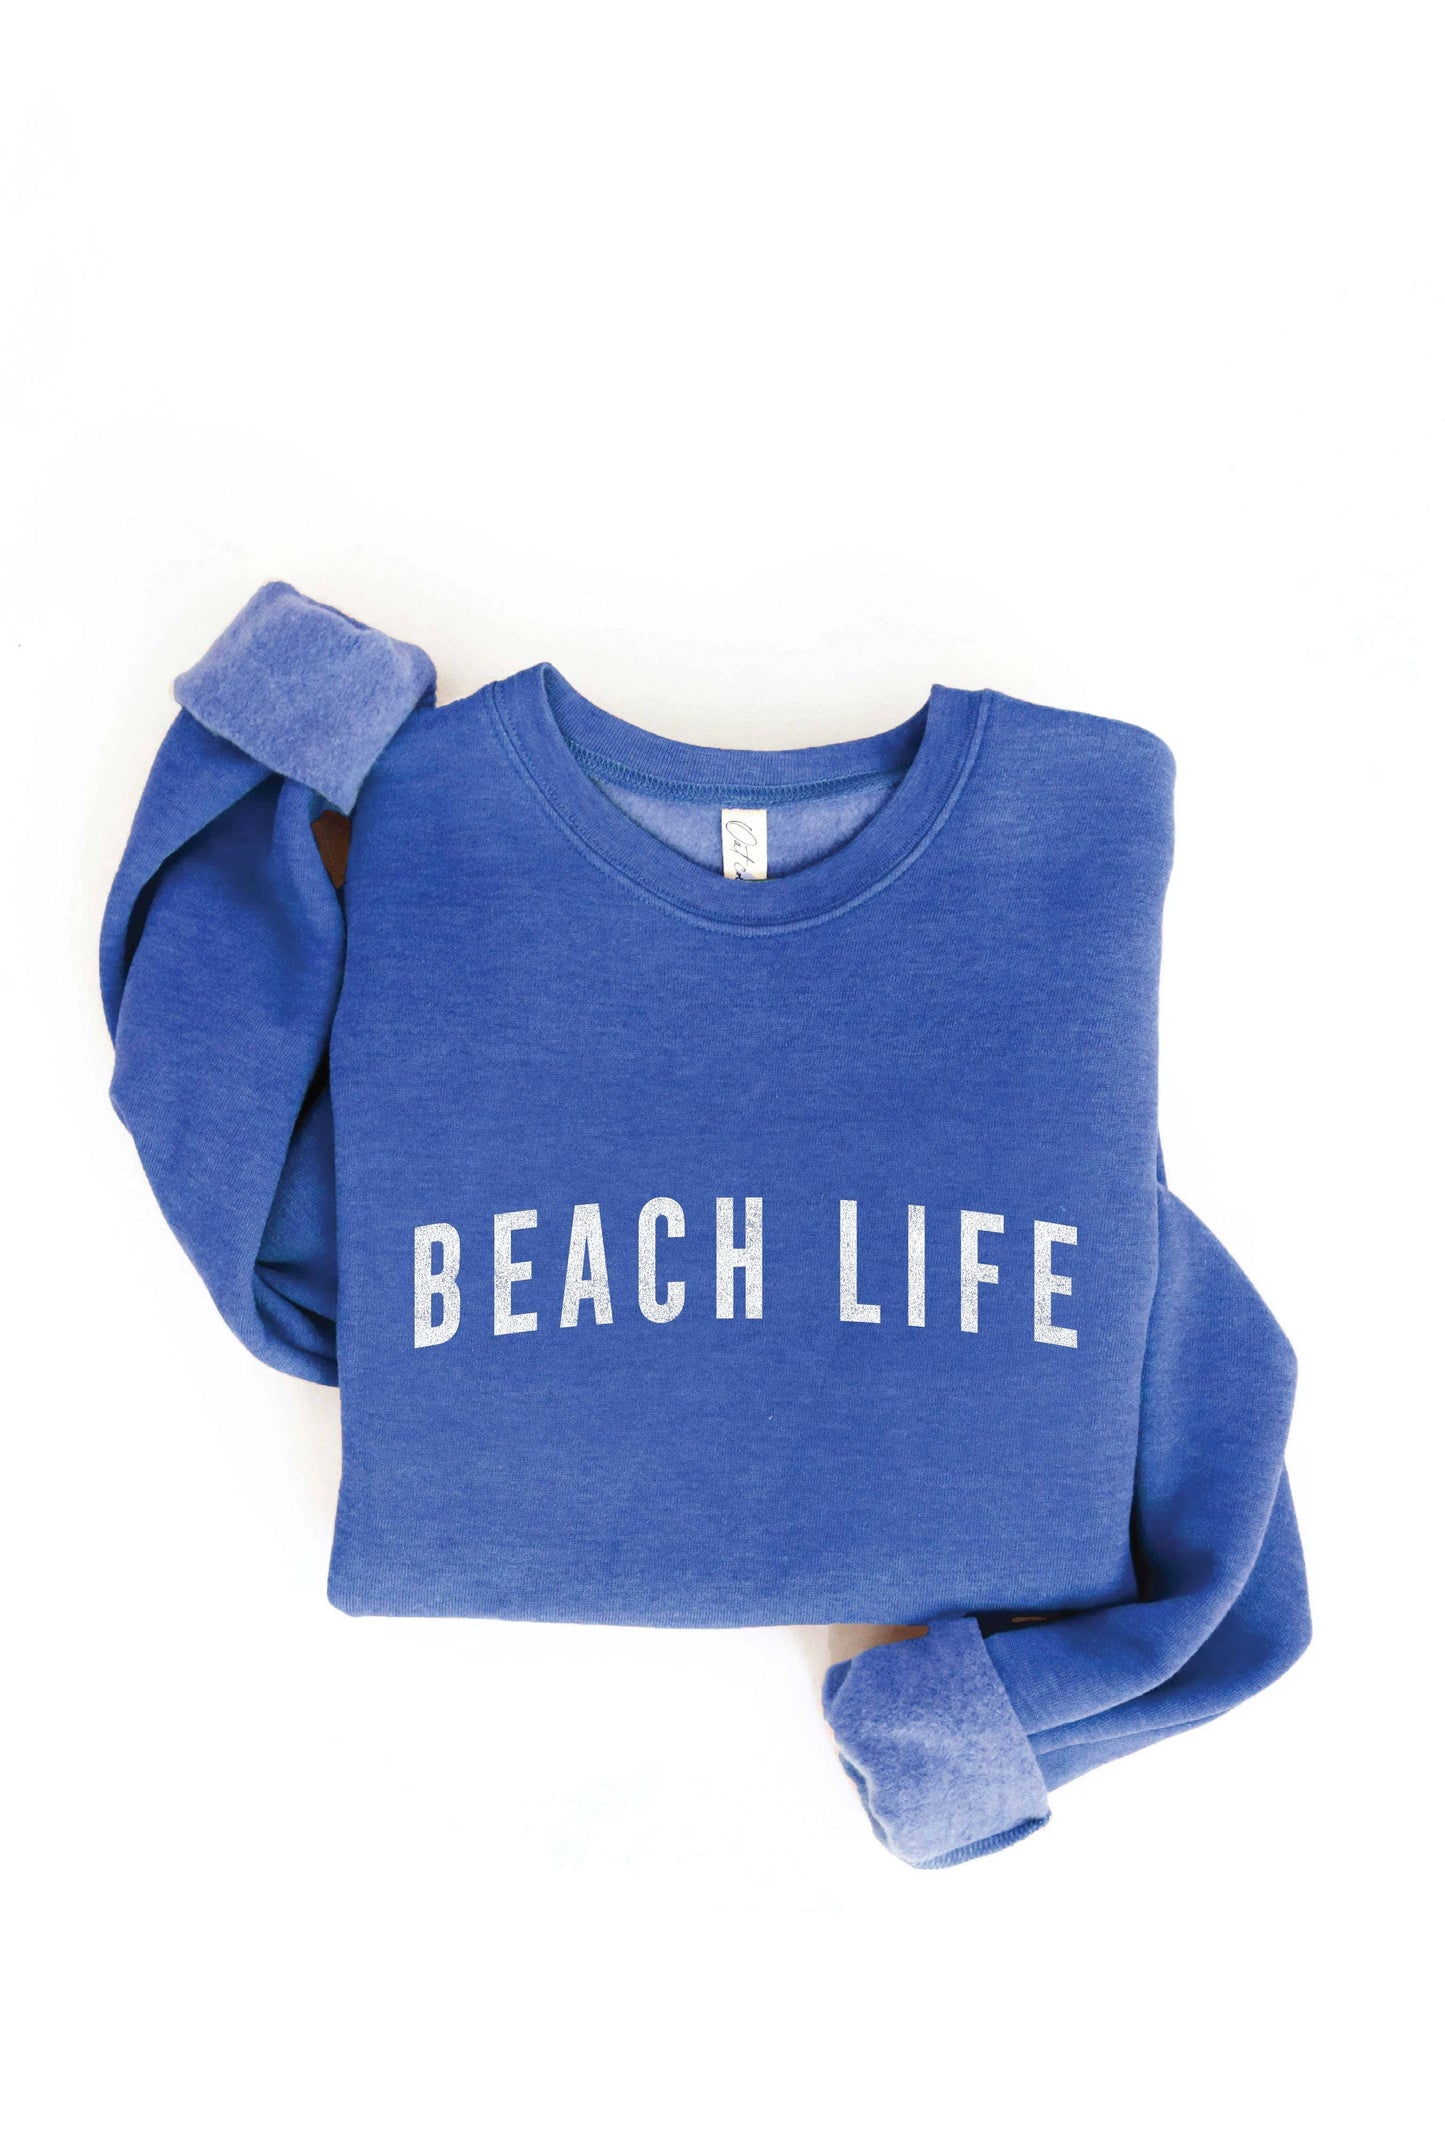 BEACH LIFE Crewneck Sweatshirt